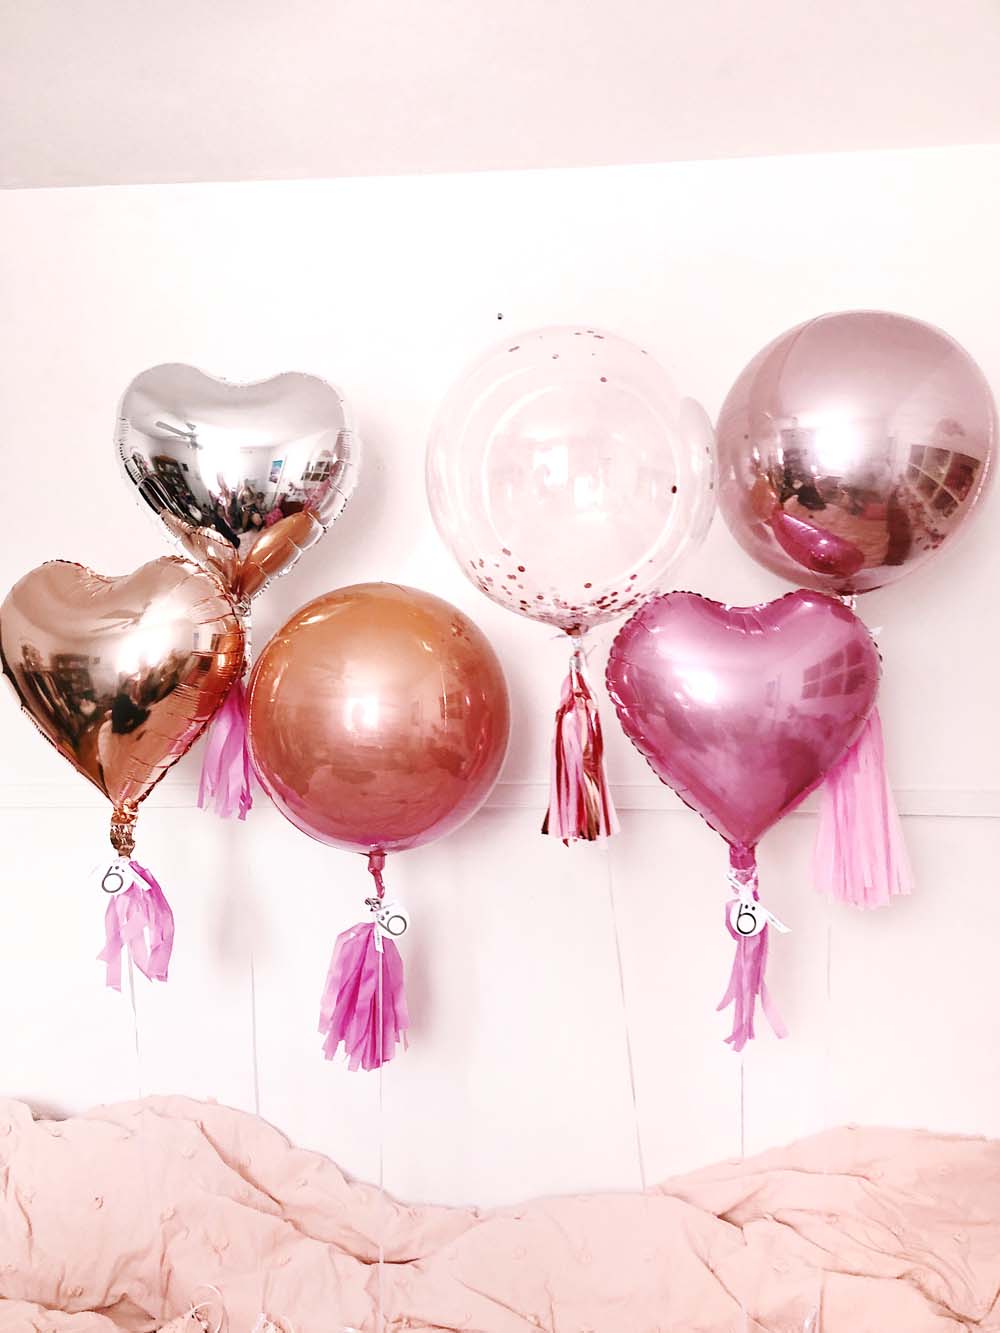 This Montreal Company Creates Beautiful Balloon Installations - Balloons